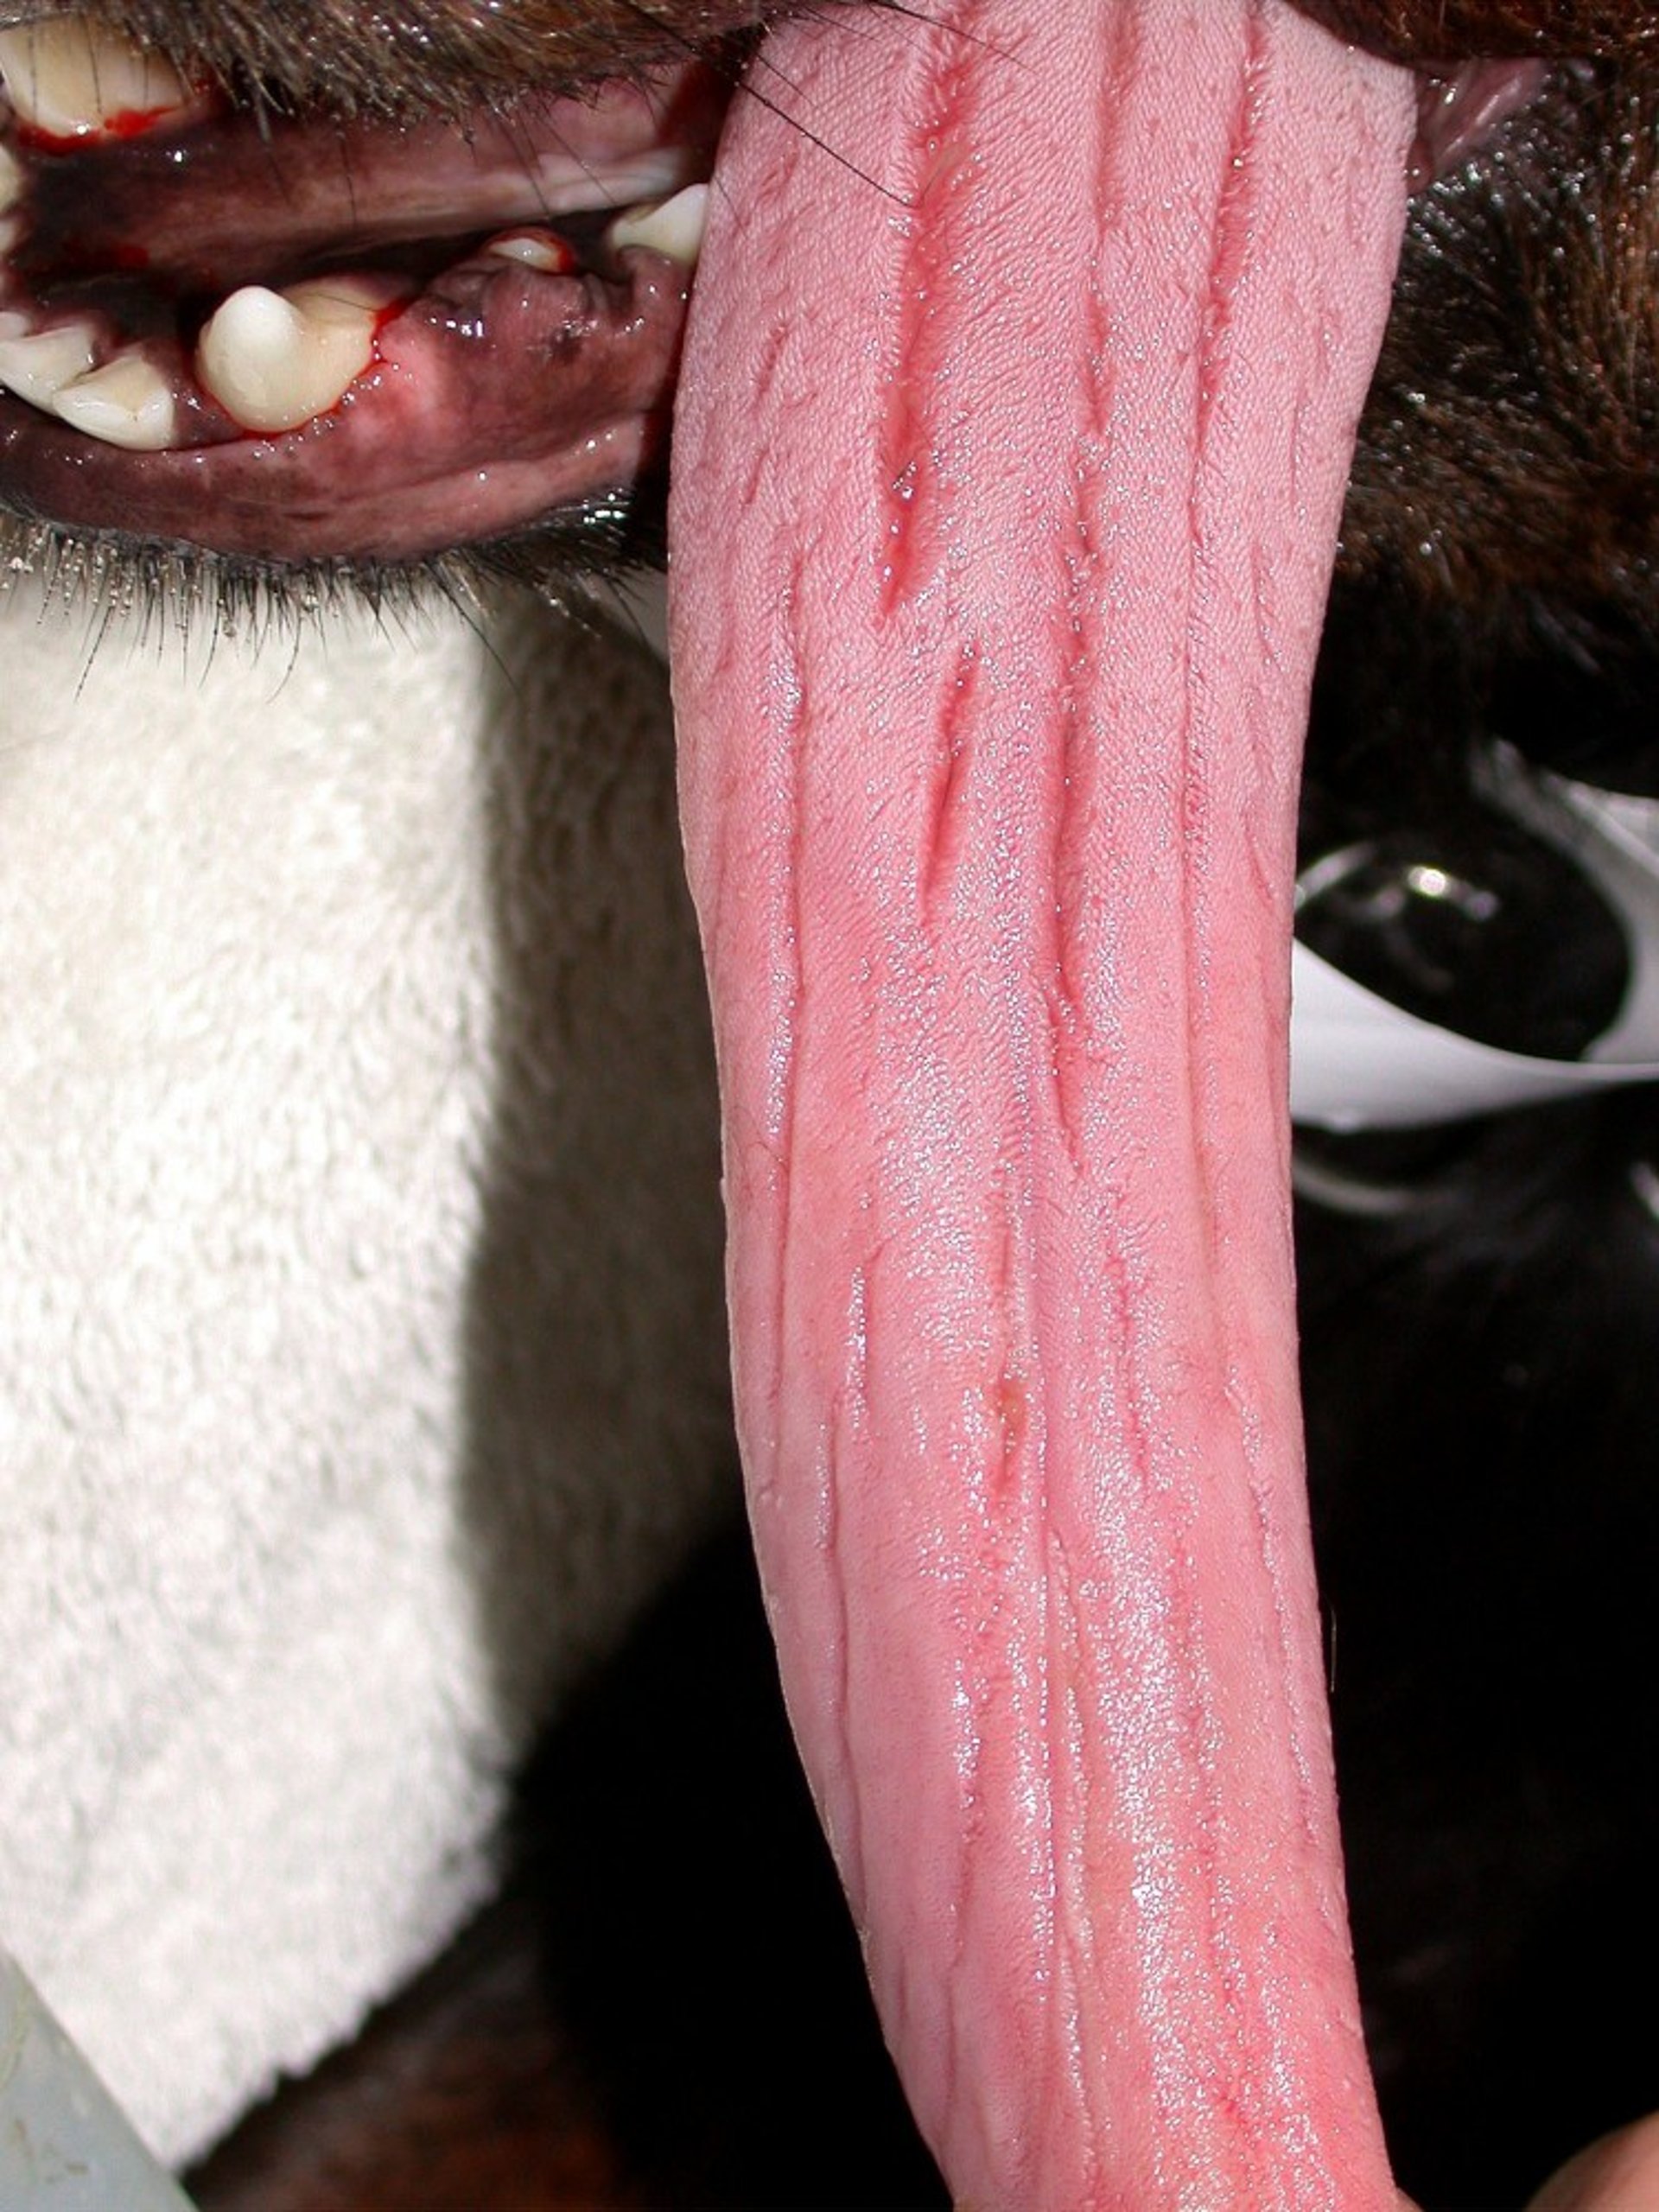 Fissured tongue, dog